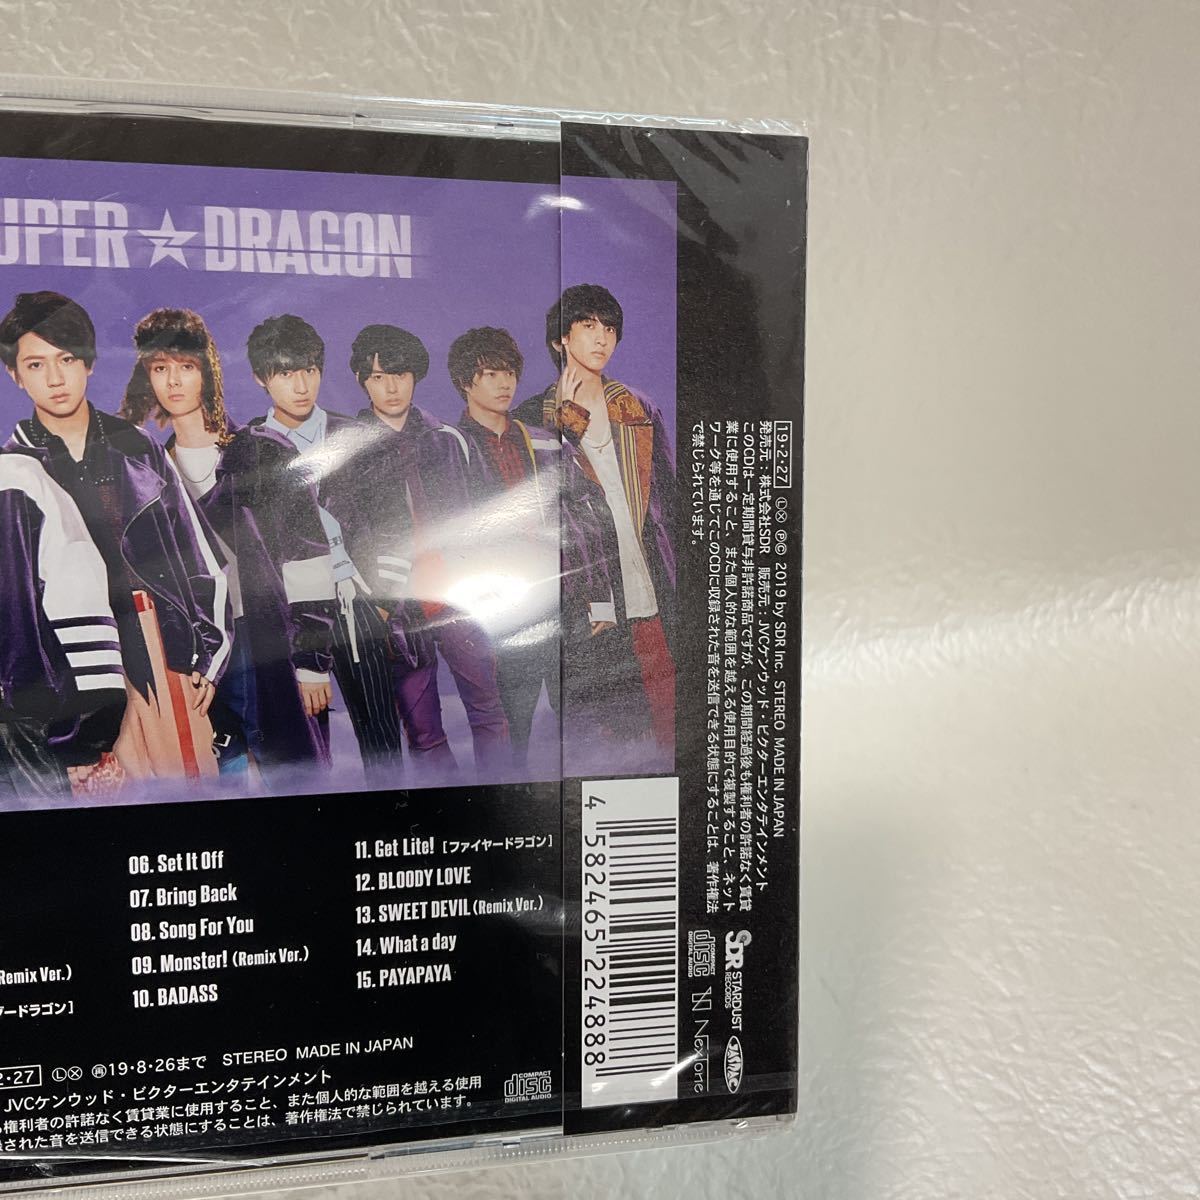 [国内盤CD] SUPER★DRAGON/2nd Emotion 未開封品